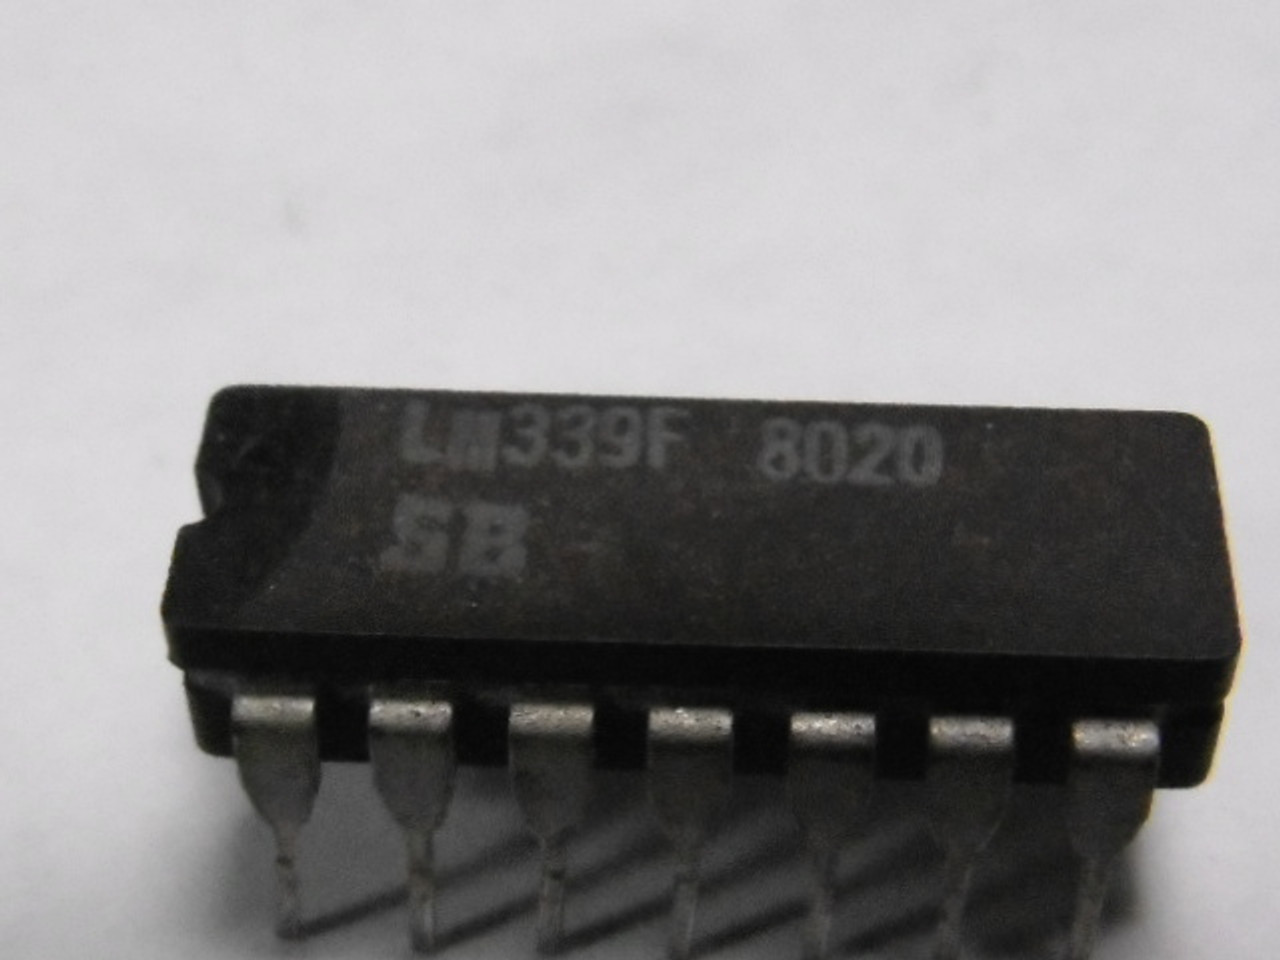 Motorola LM339F Quad Single Supply Comparator 14-Pin USED